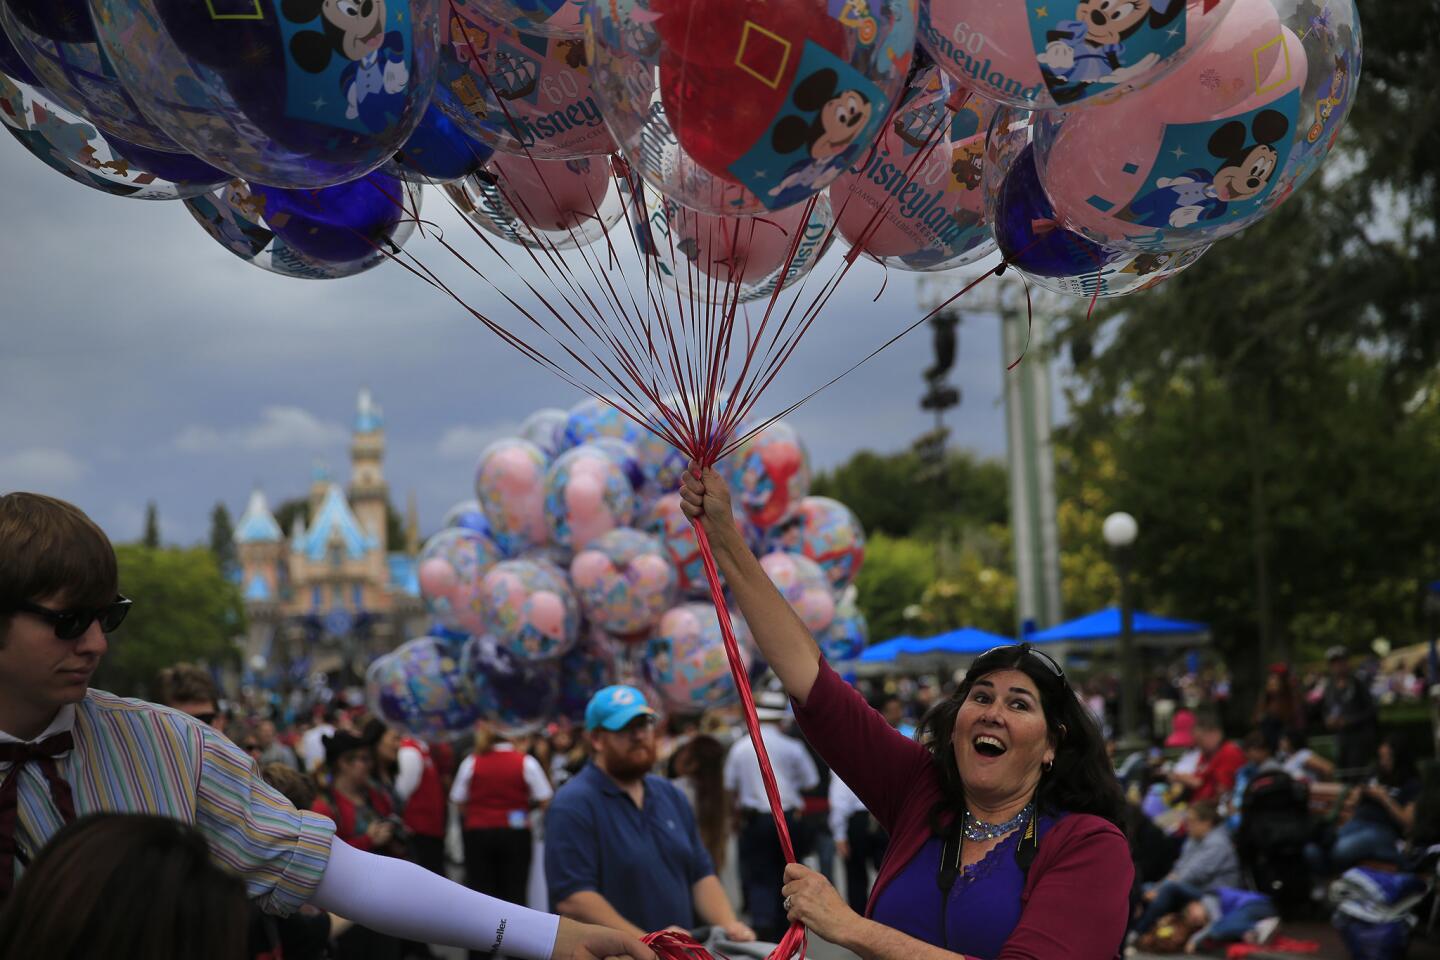 Disneyland 60th anniversary celebration